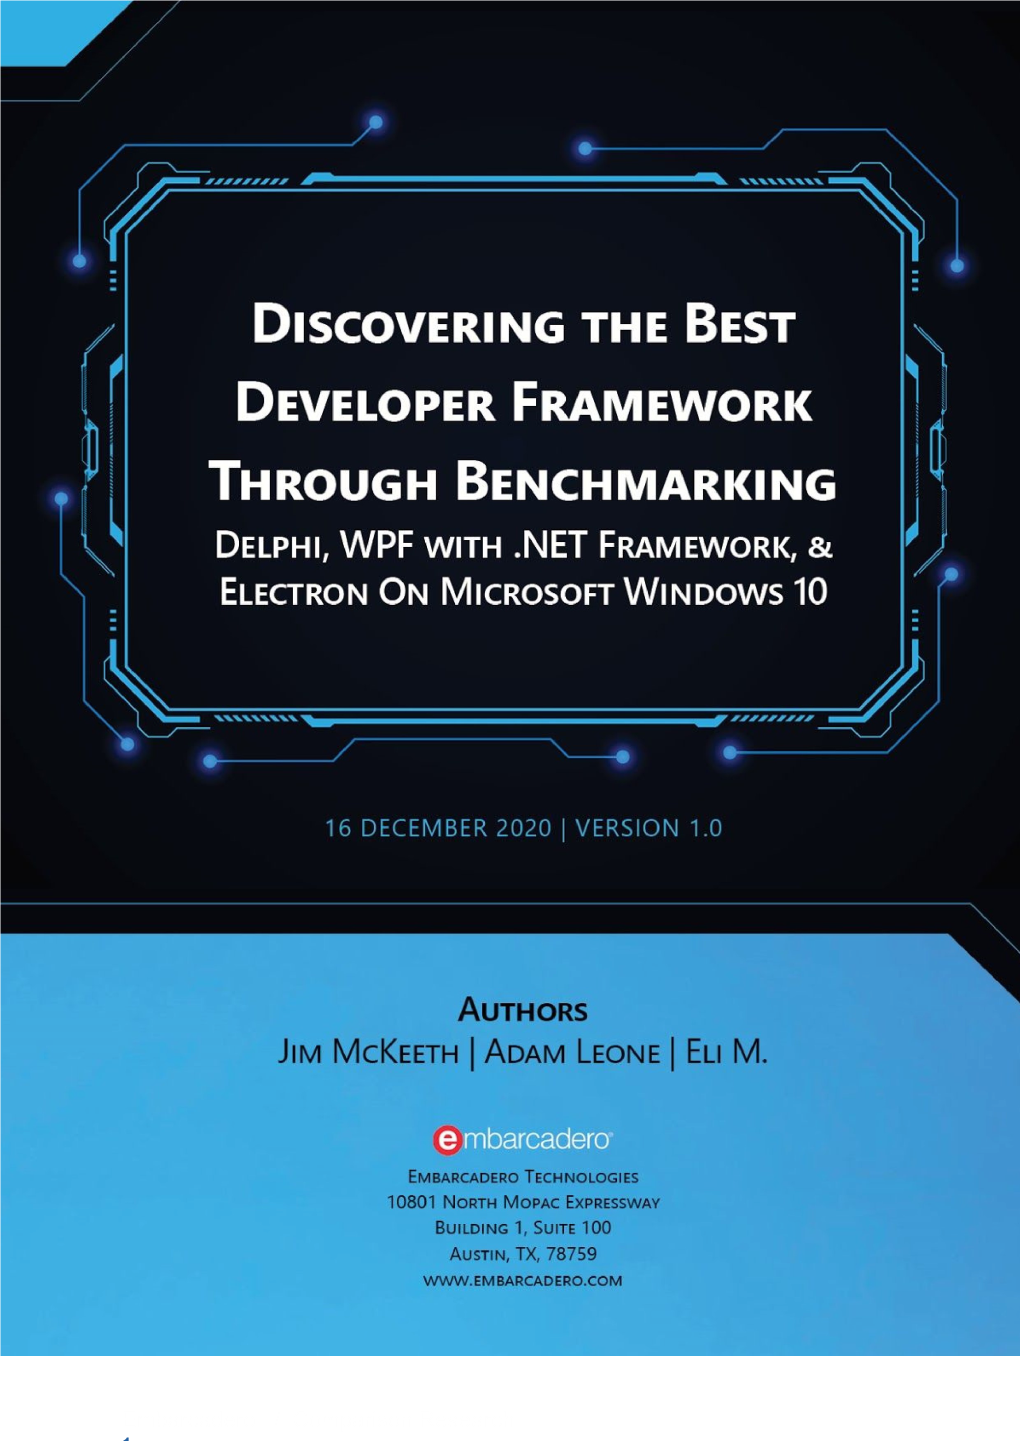 Discovering the Best Developer Framework Through Benchmarking Delphi, WPF with .NET Framework, & Electron on Microsoft Windows 10